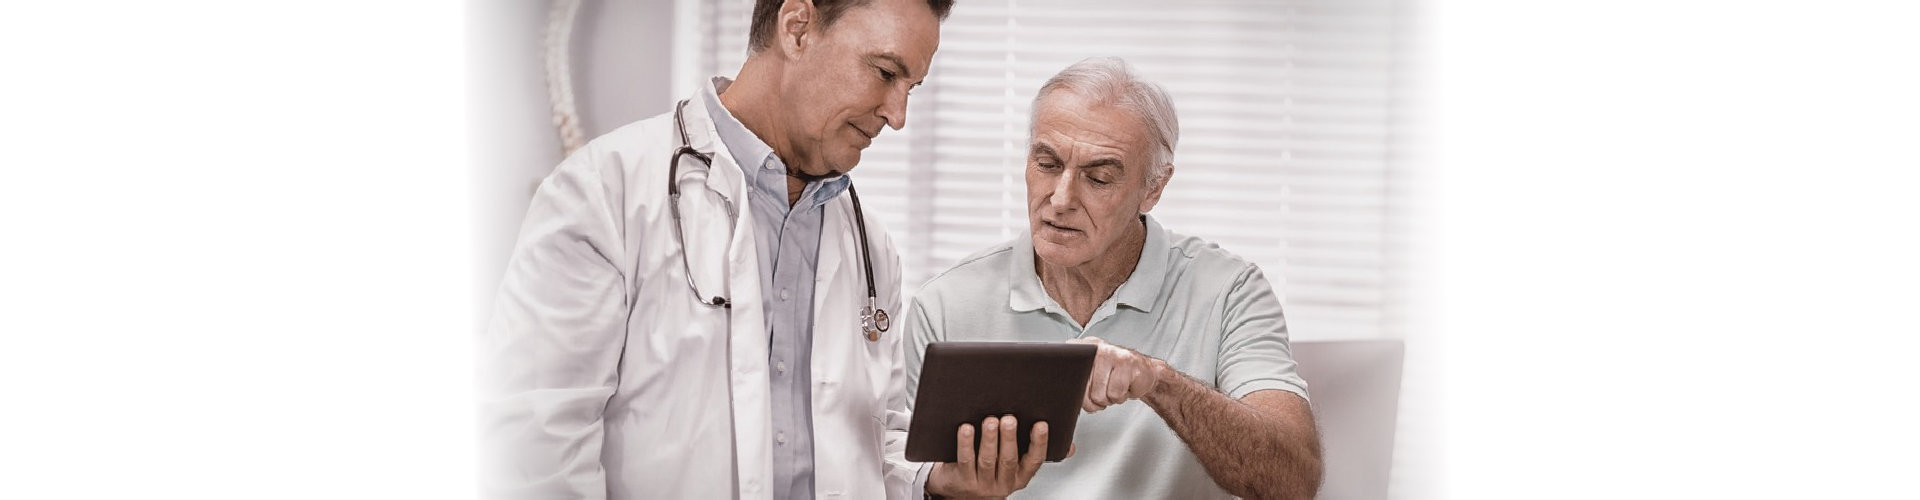 doctor reminding senior man about his medication